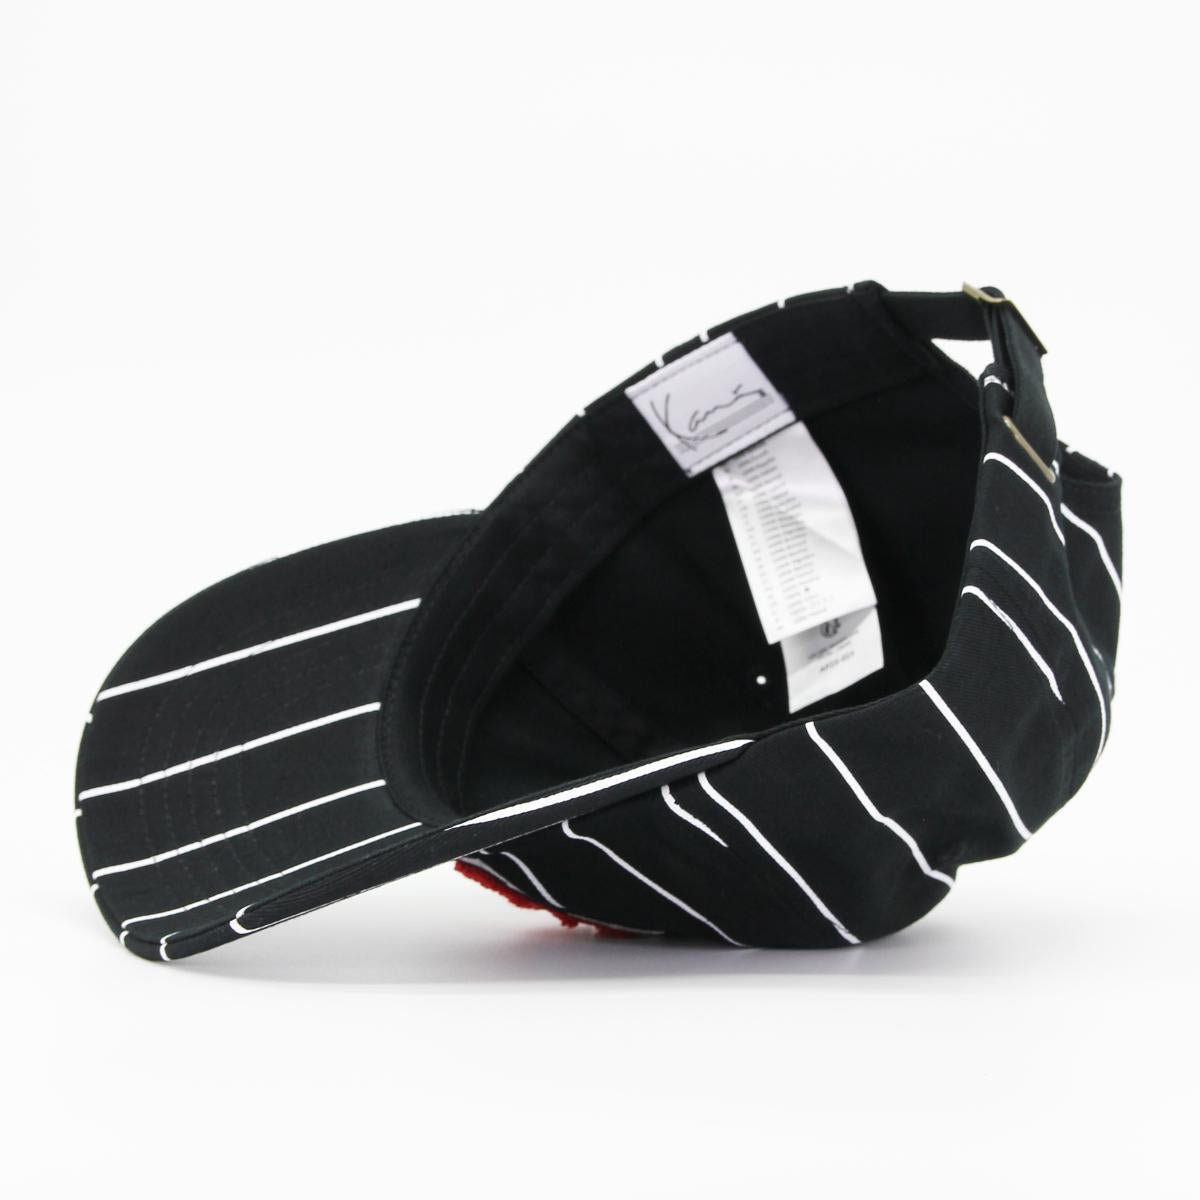 Karl Kani retro patch pinstripe cap black/red/white - Shop-Tetuan